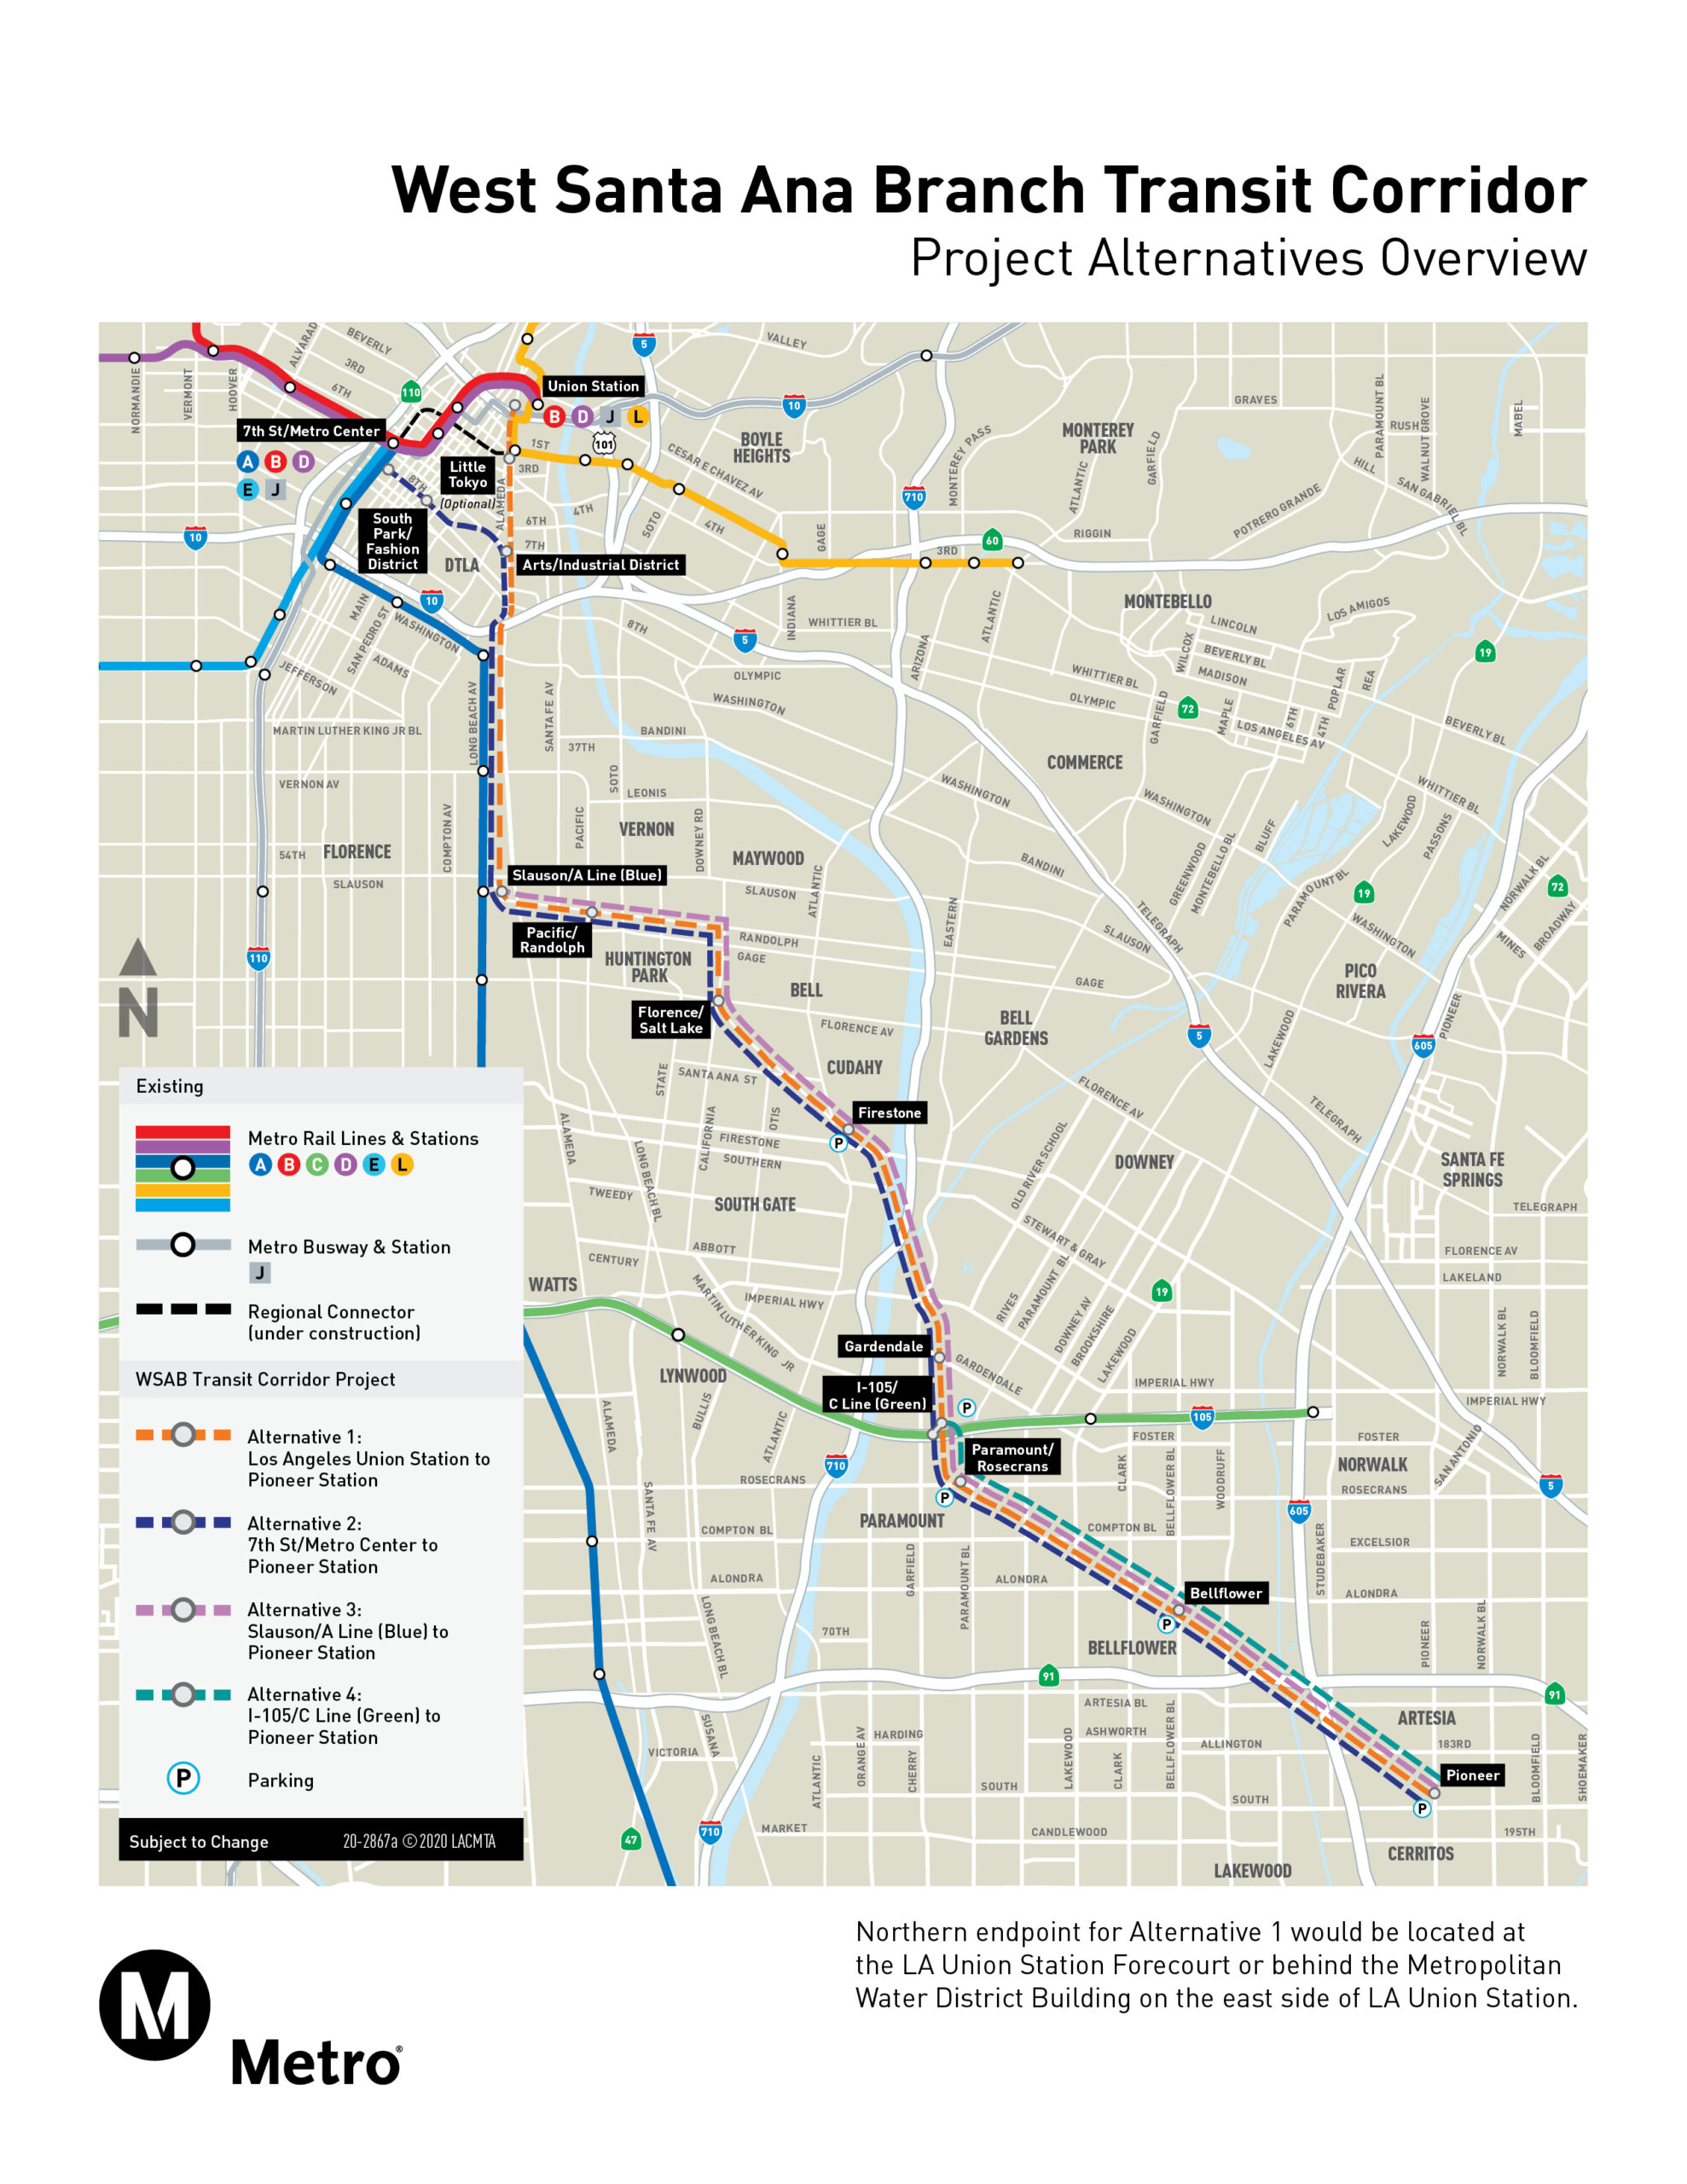 West Santa Ana Branch Transit Corridor Project Map